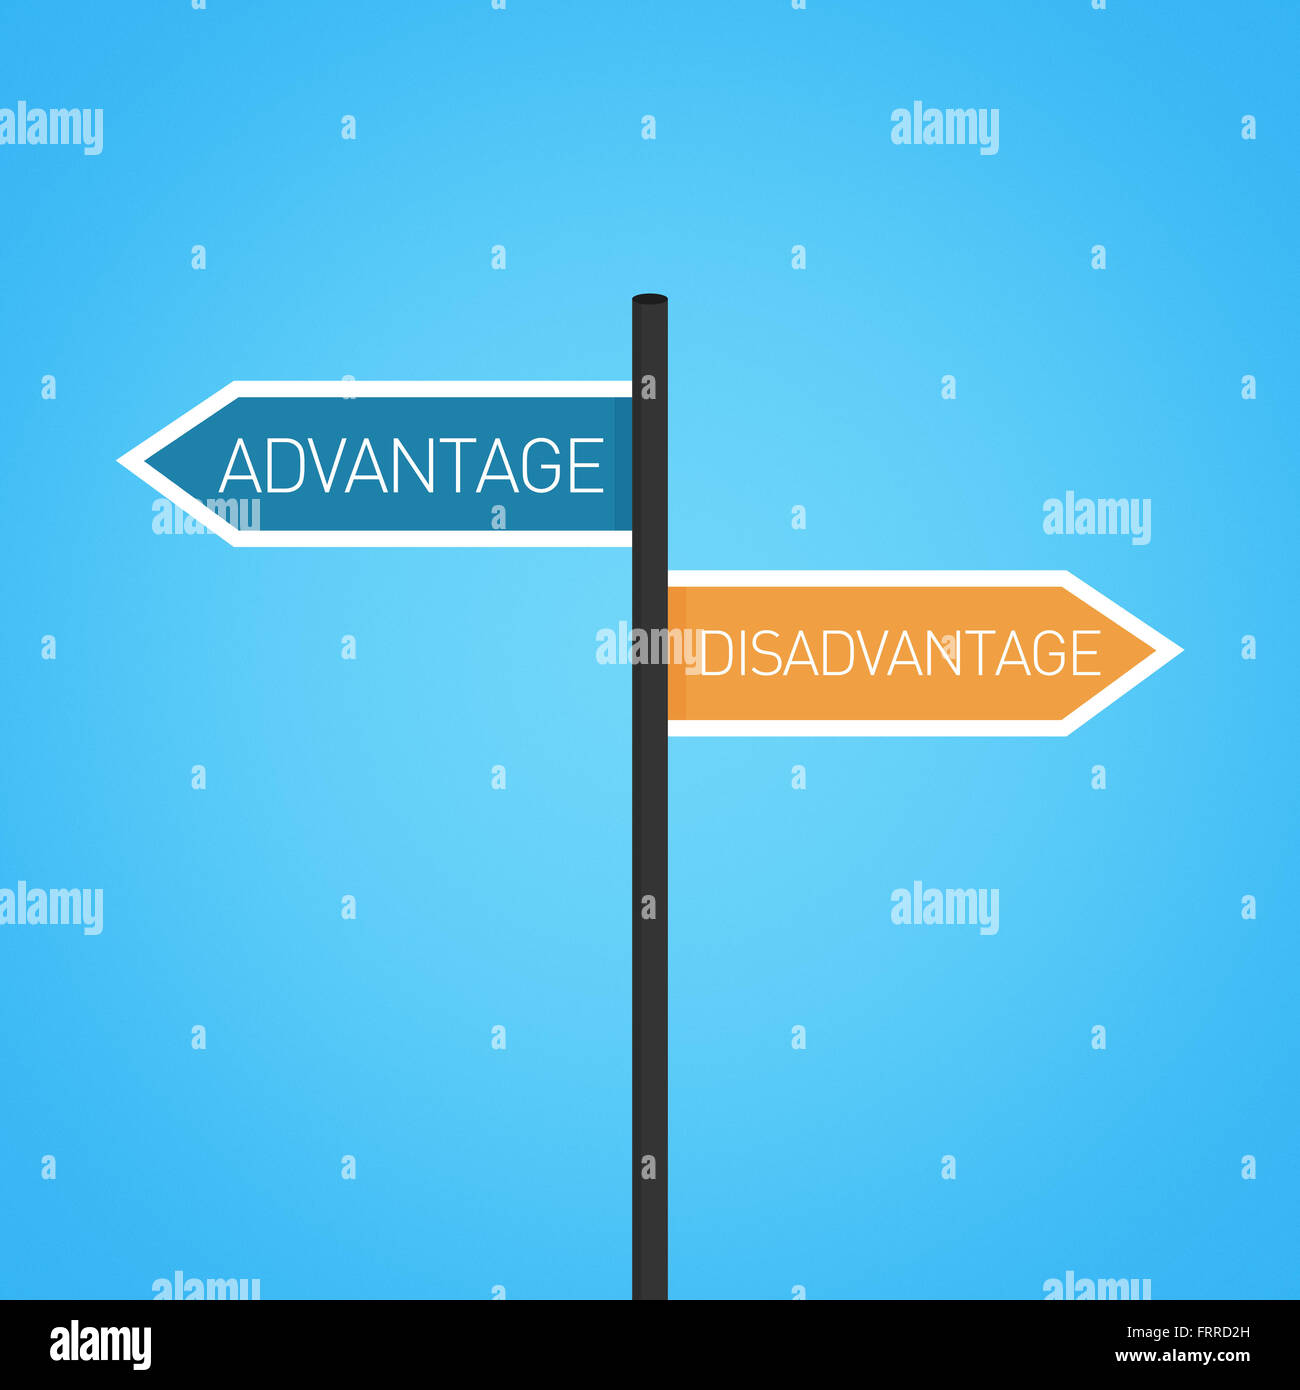 Advantage vs disadvantage choice road sign concept, flat design Stock Photo